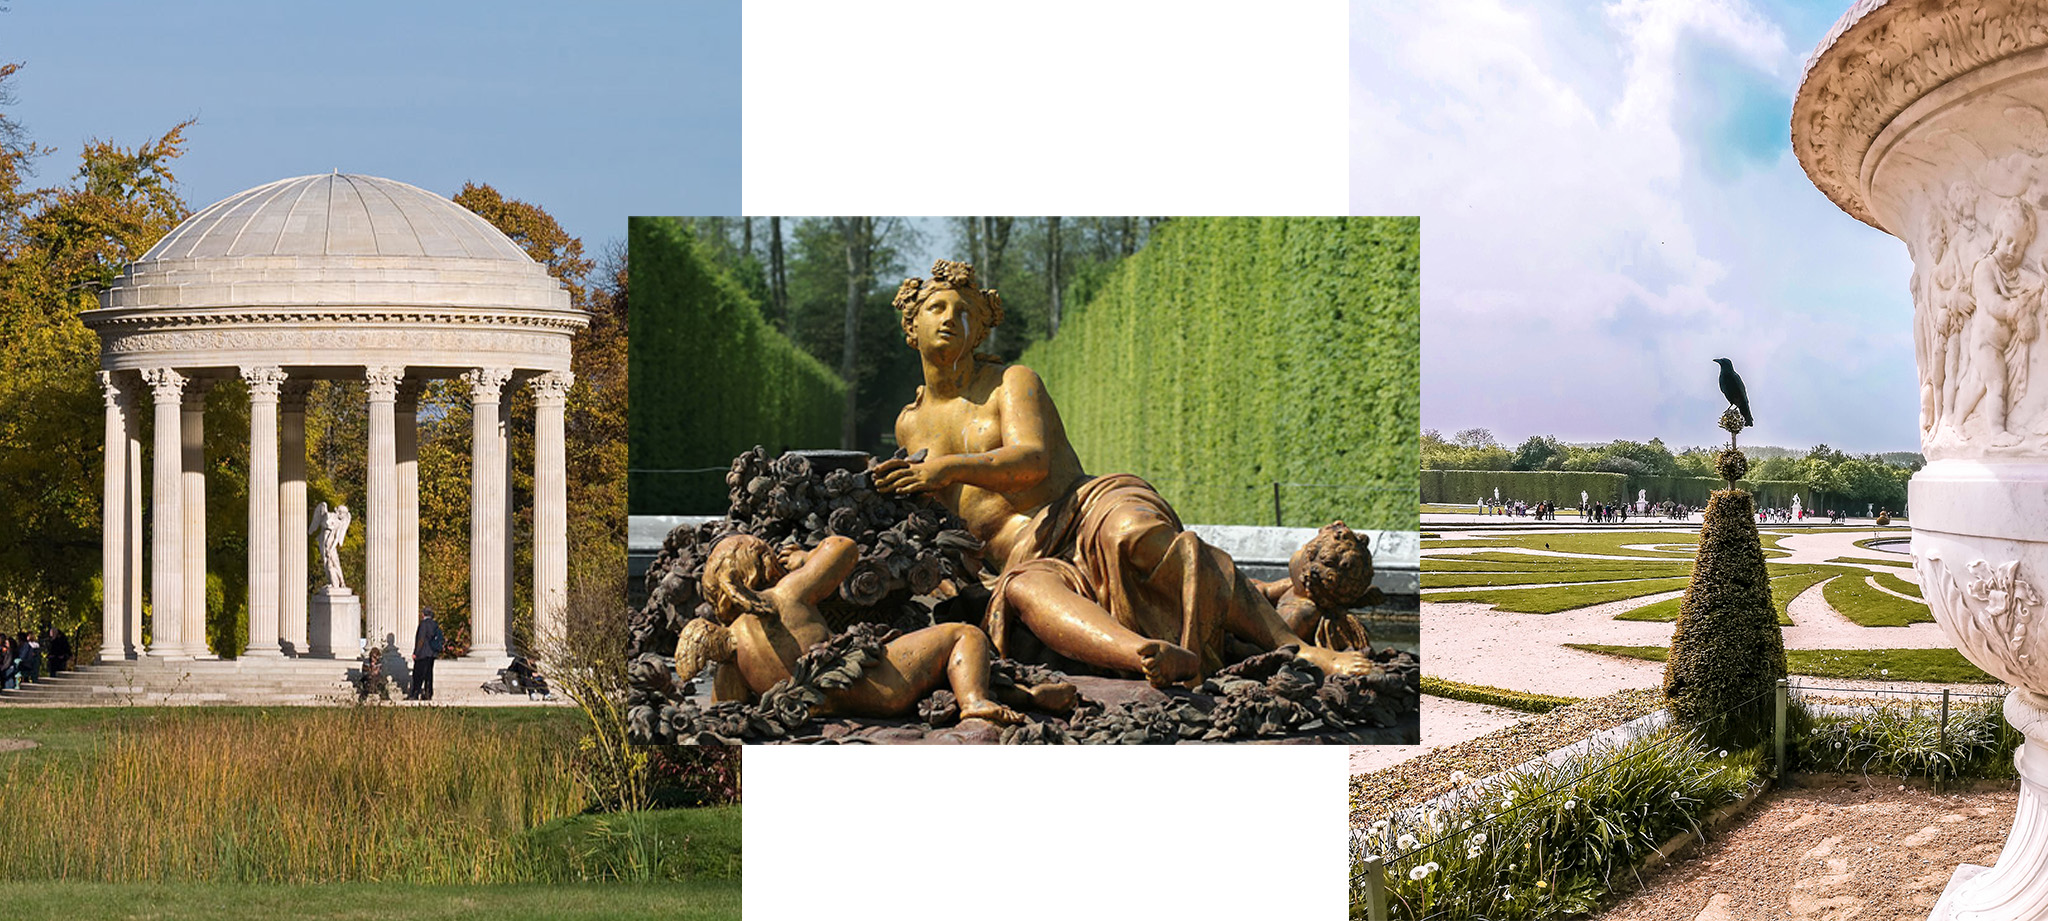 gardens-of-versailles-jardin-de-versailles-©Myrabella-rapheal-jean-baptiste-wikicommons-blog